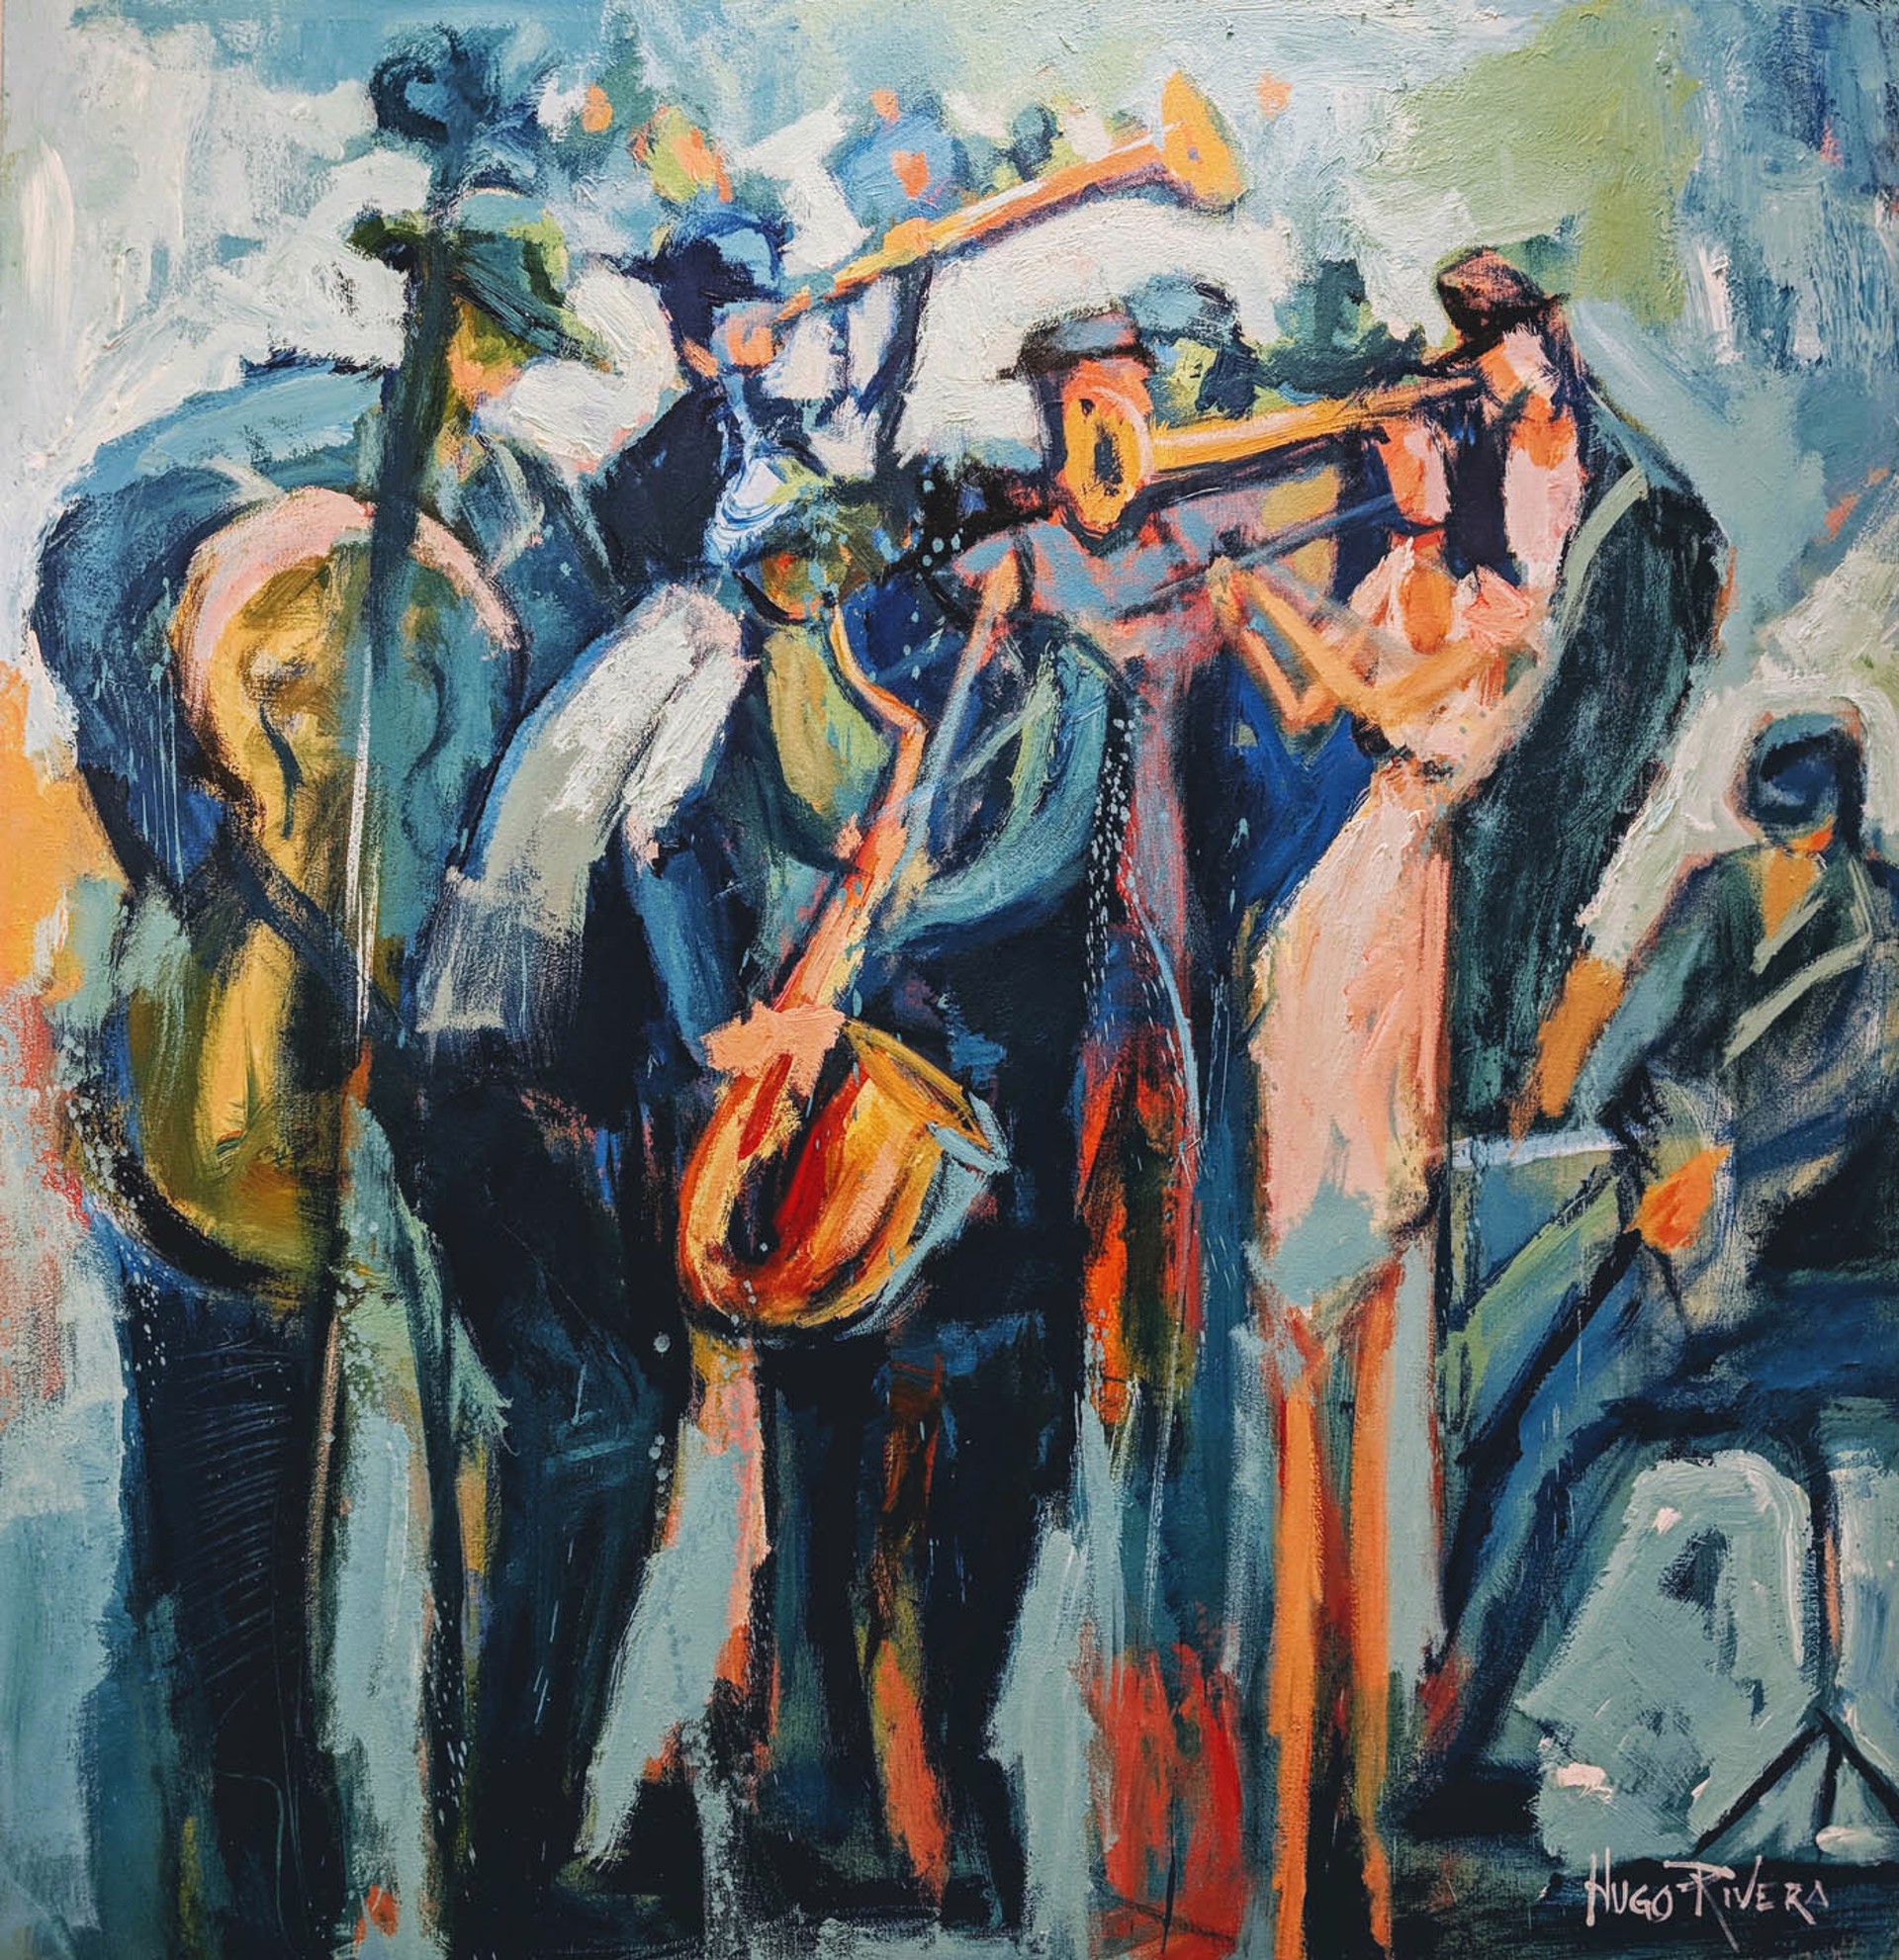 The Band by Hugo RIVERA